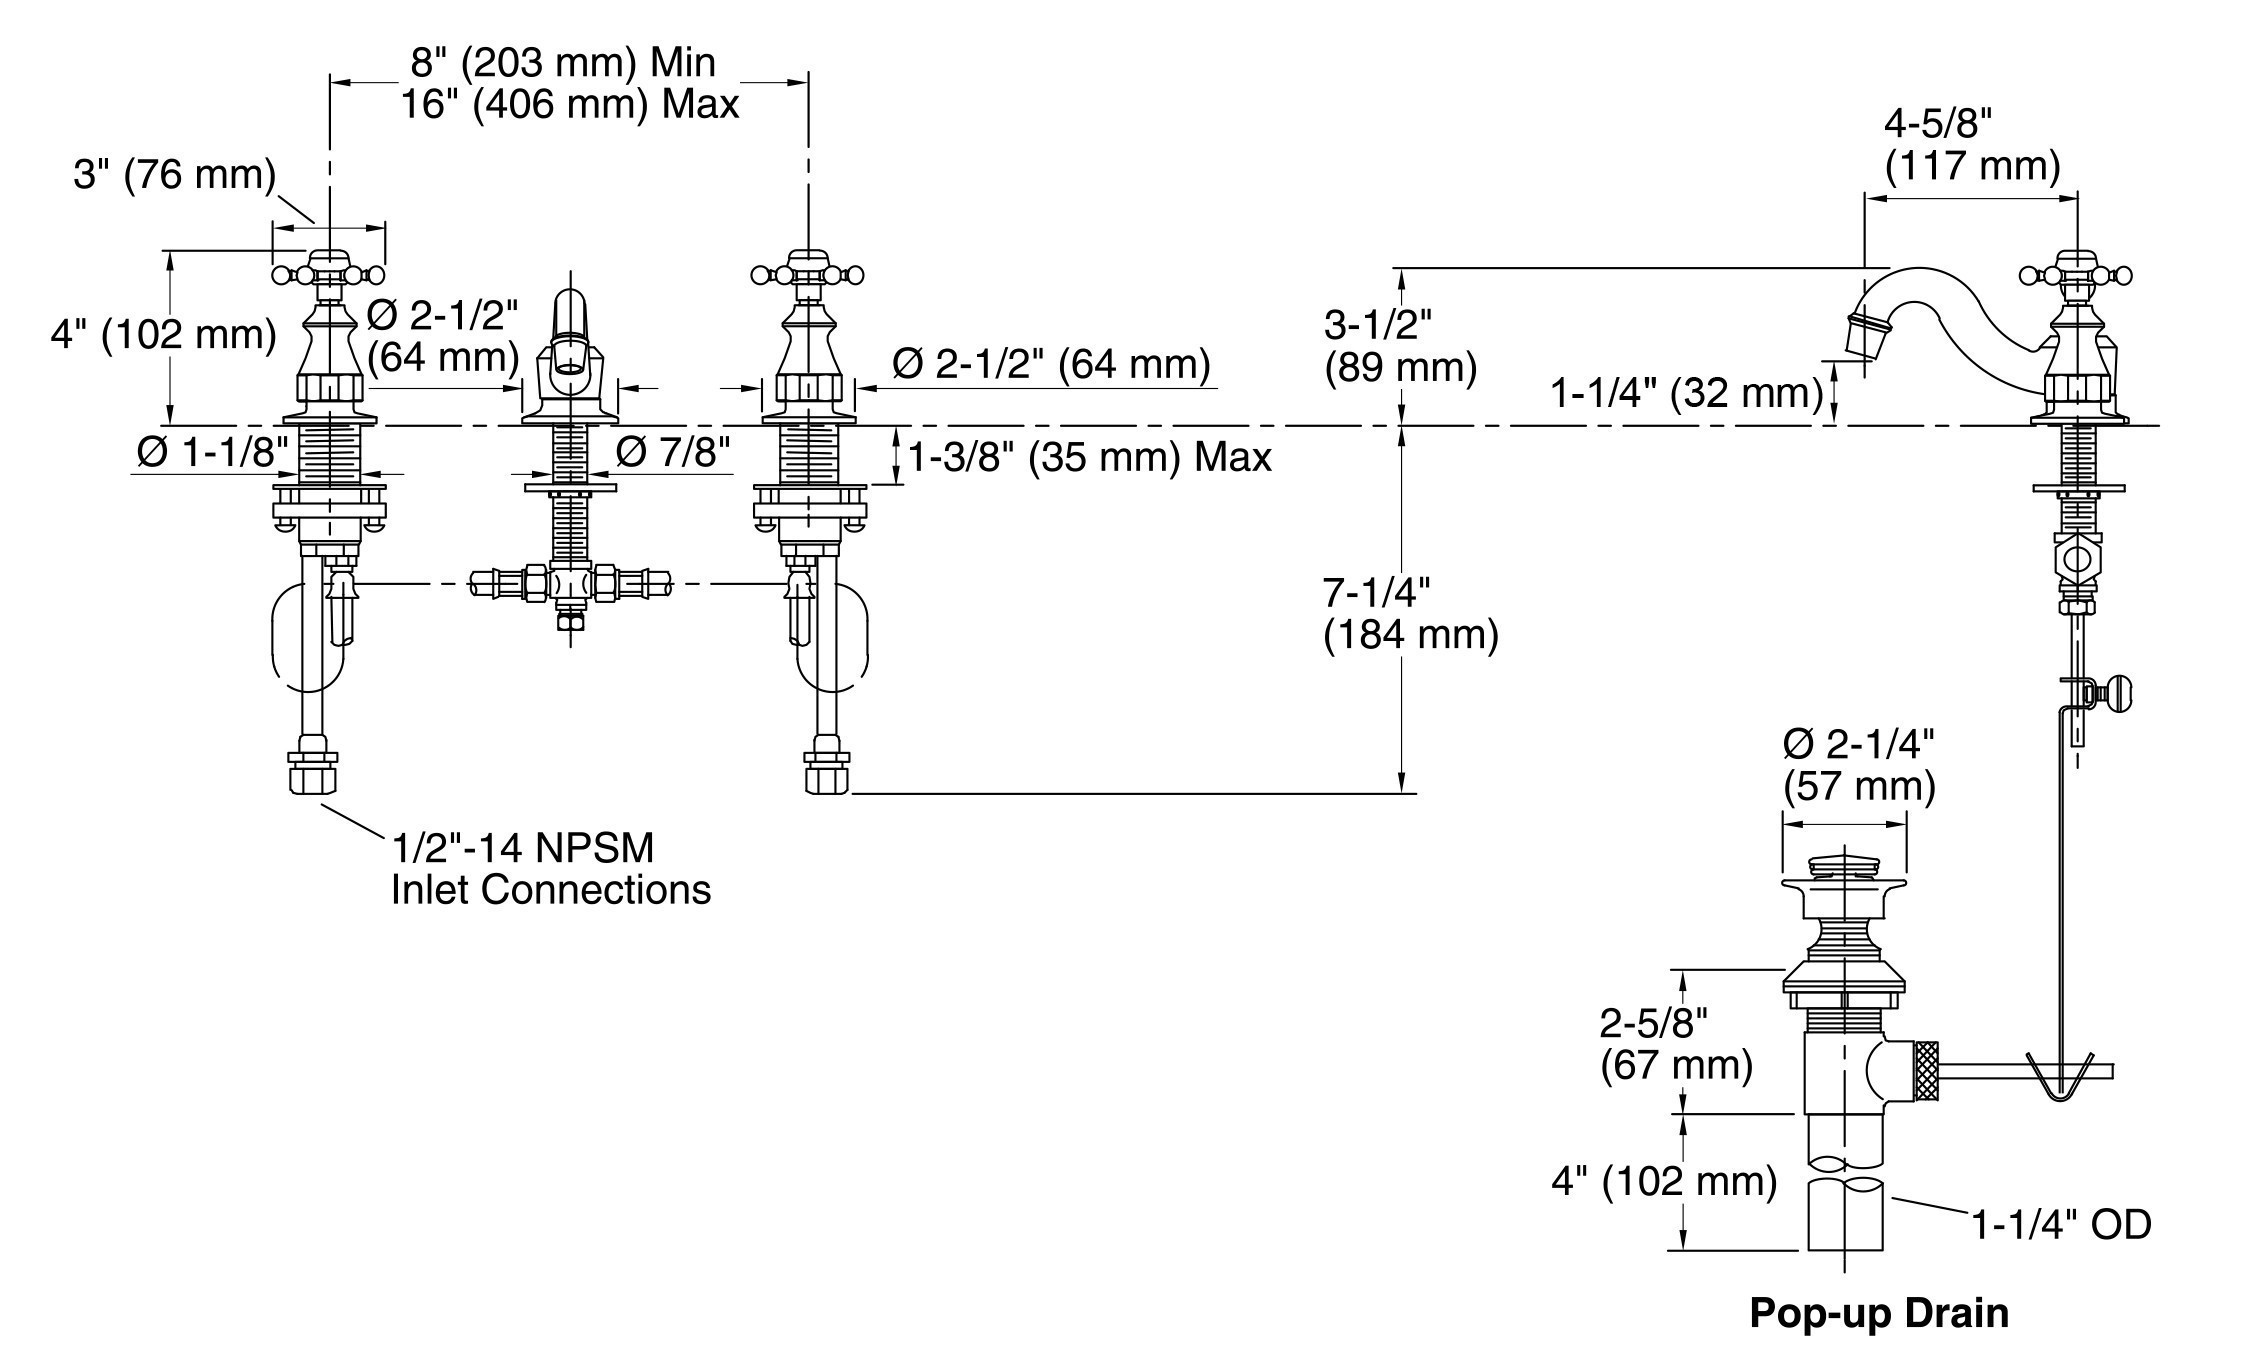 Kohler Engine Wiring Diagram Kohler Ignition Switch Wiring Diagram Best Kohler Ignition Switch Of Kohler Engine Wiring Diagram